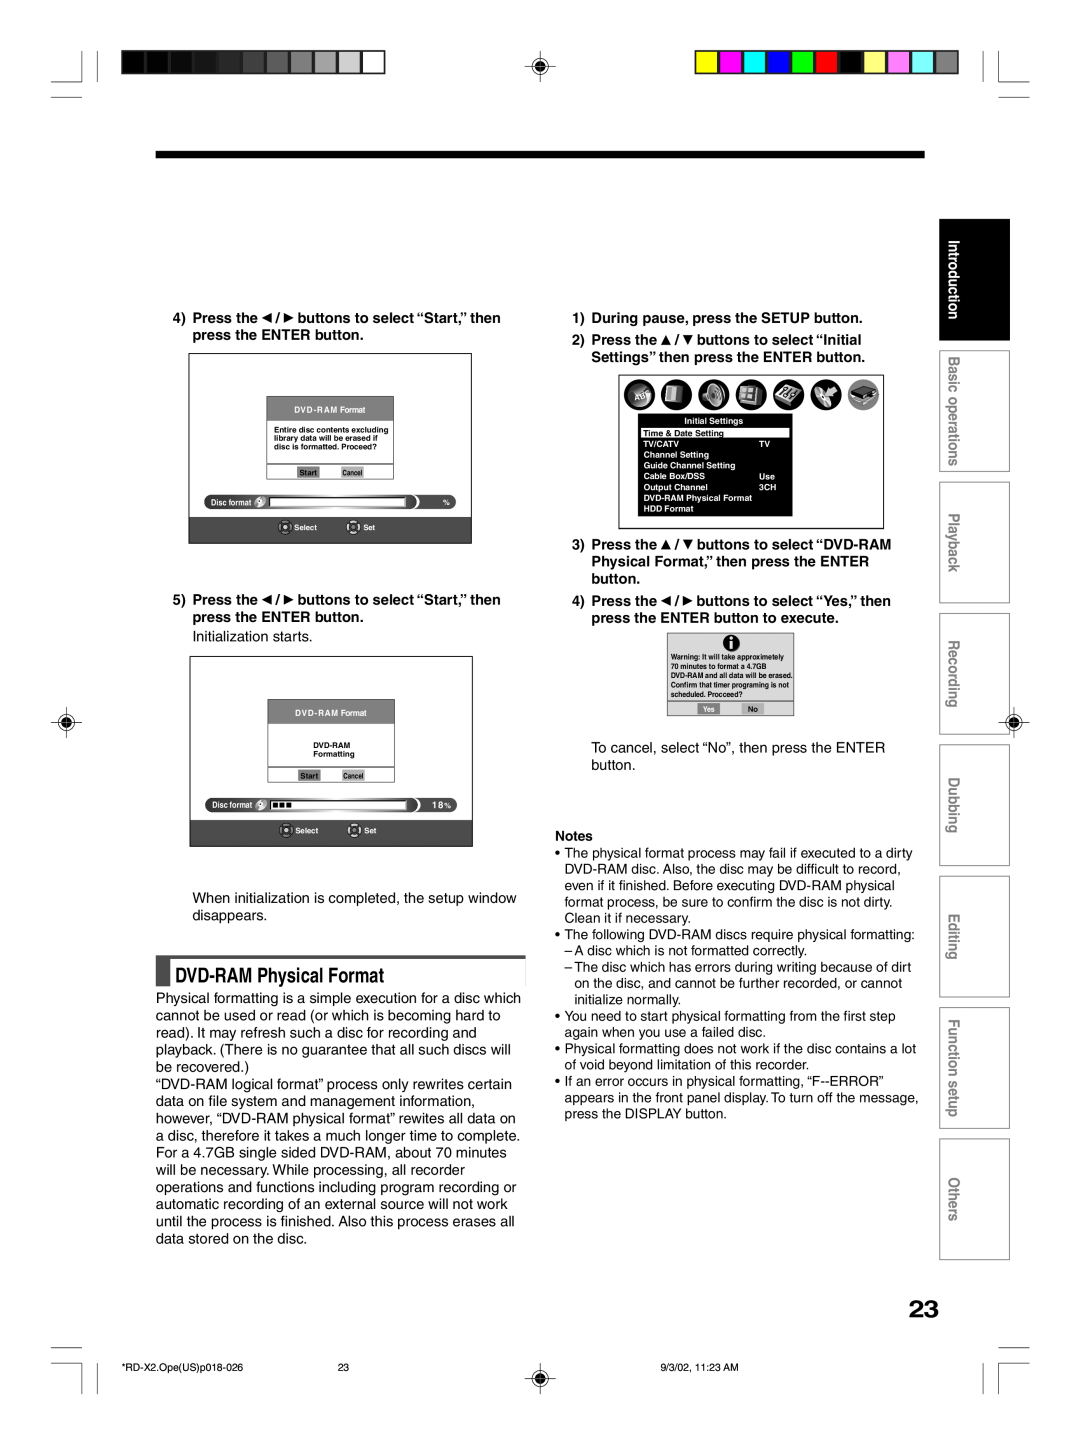 Toshiba RD-X2U owner manual DVD-RAMPhysical Format, Basic, Dubbing, Others 